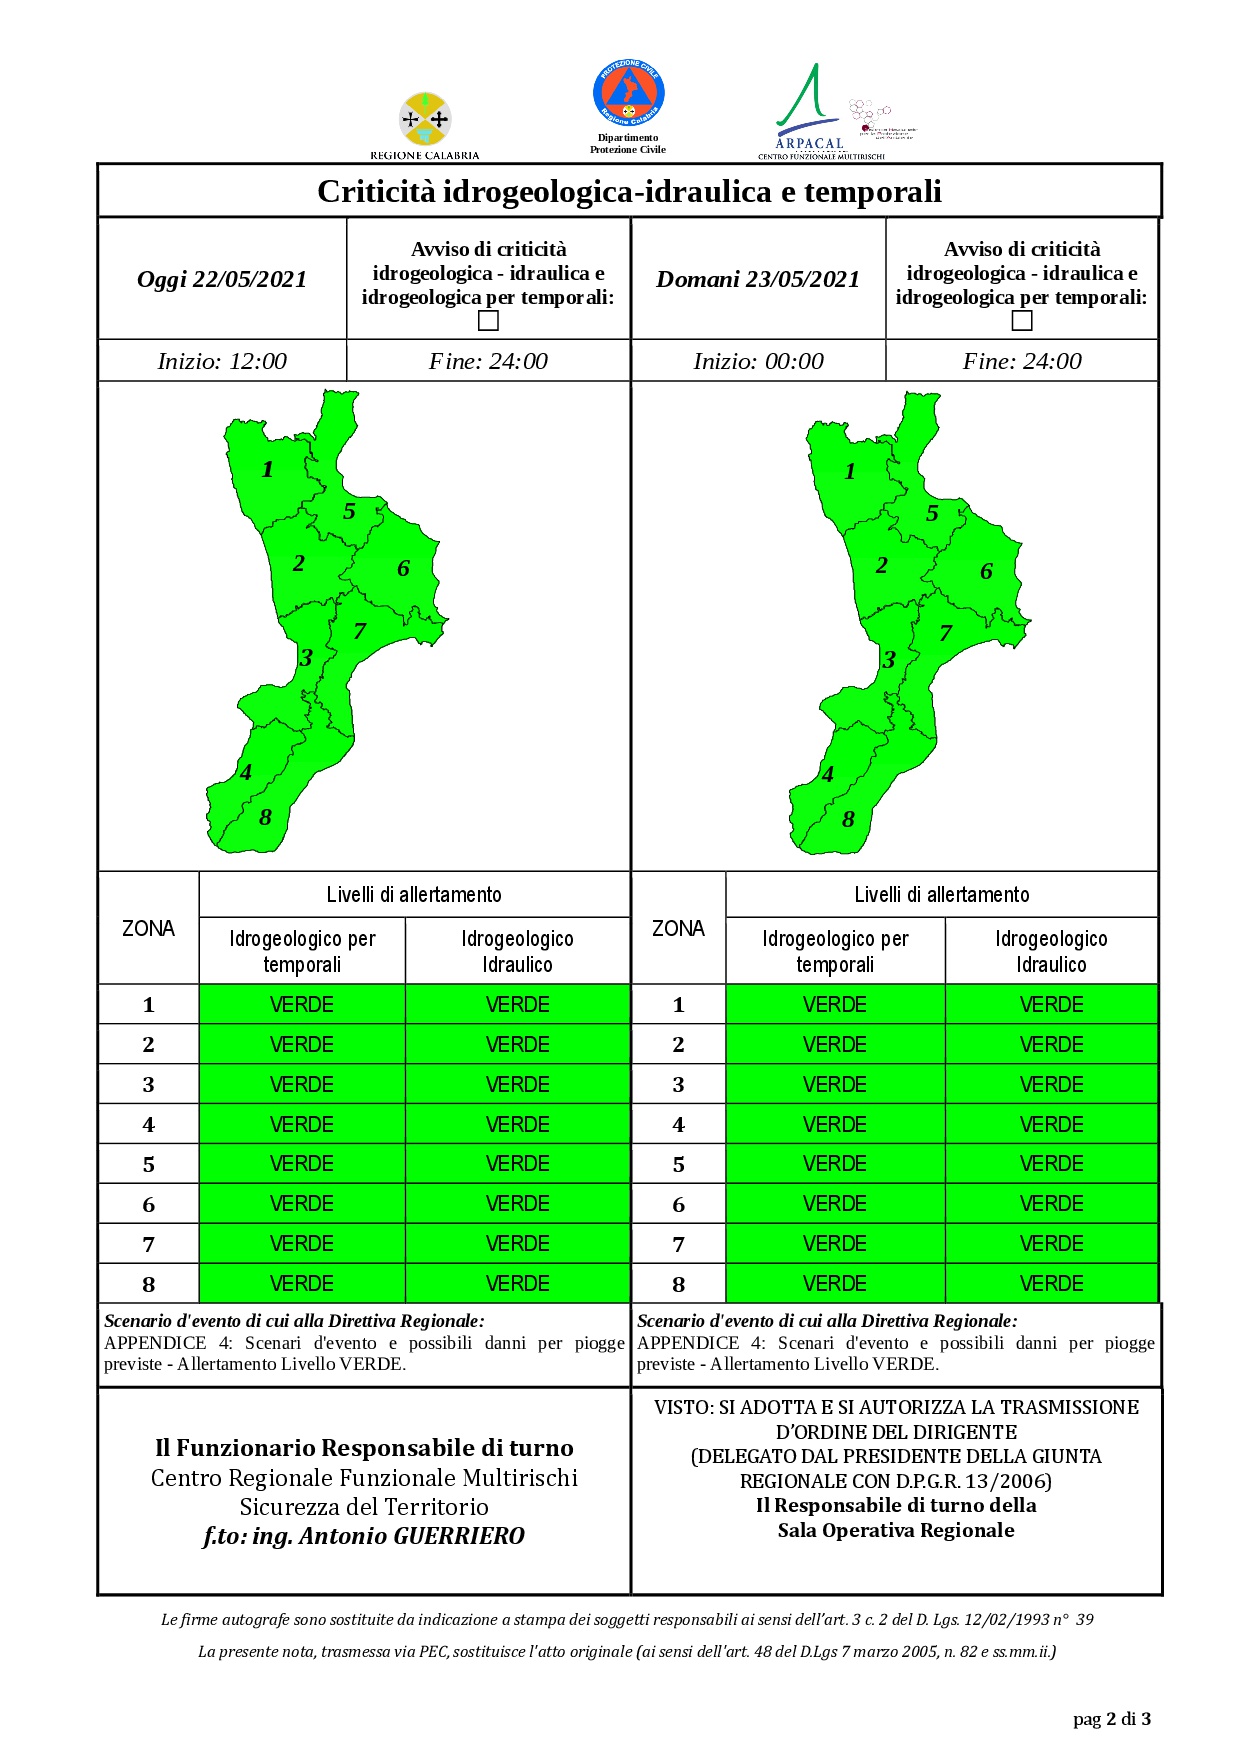 Criticità idrogeologica-idraulica e temporali in Calabria 22-05-2021